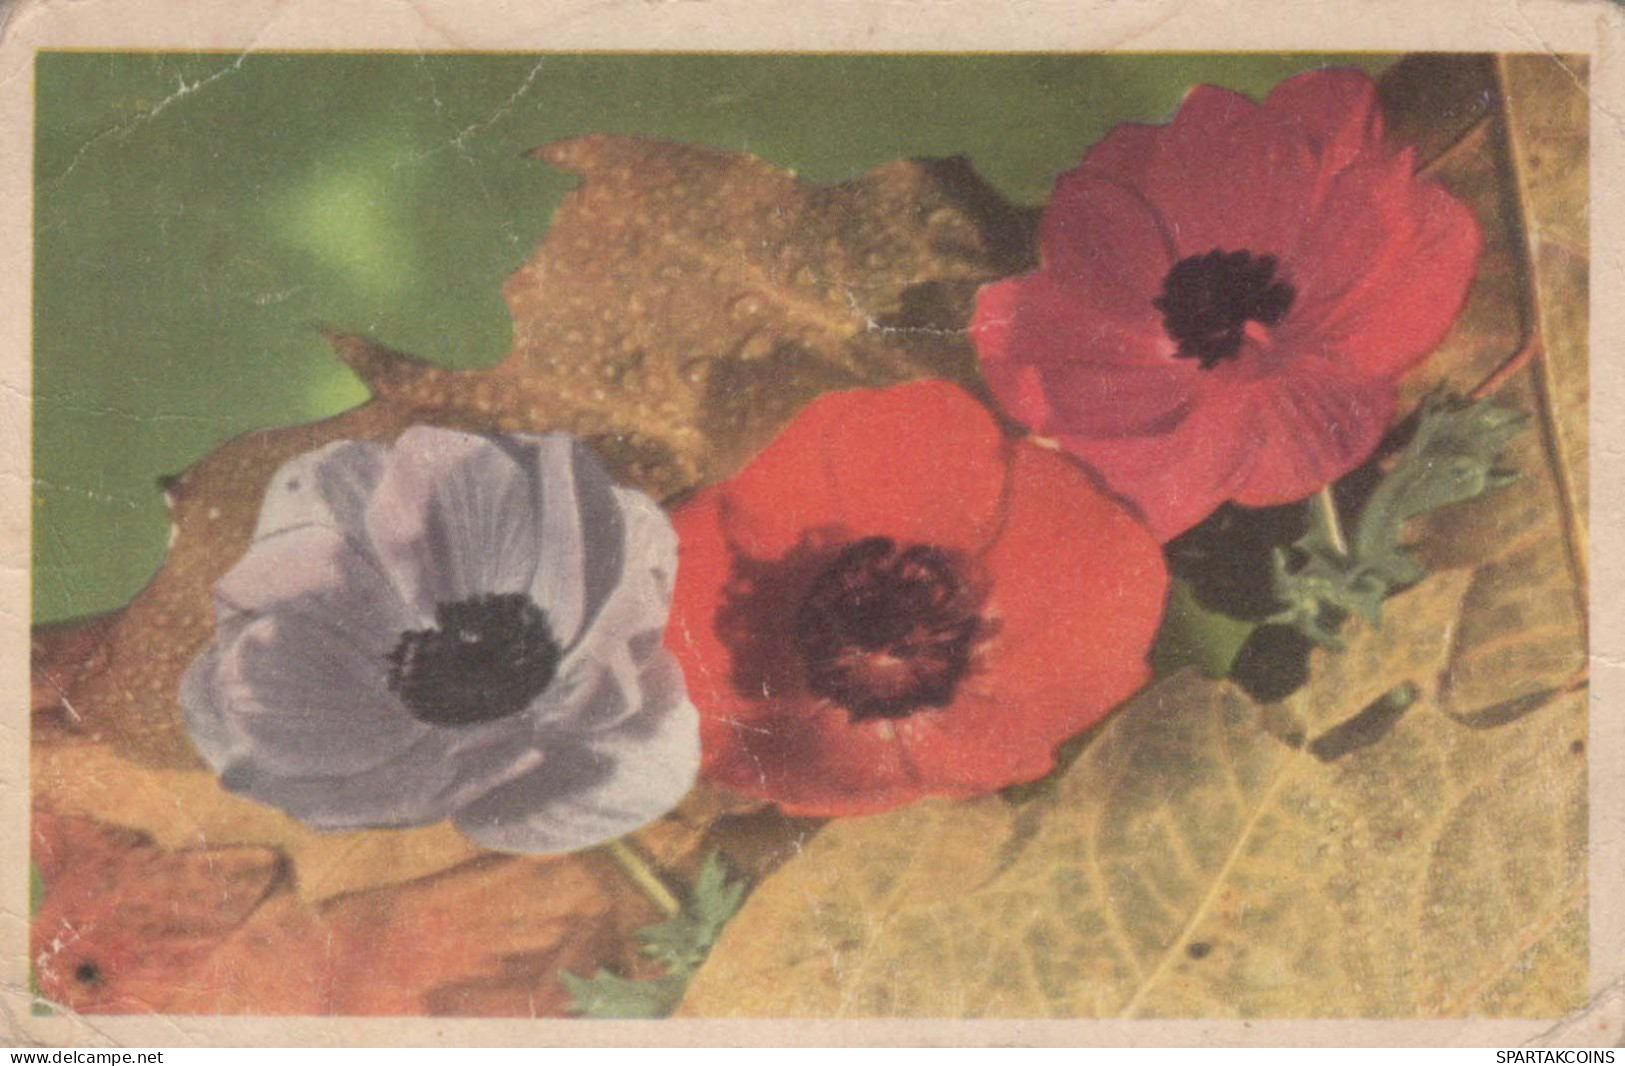 FIORI Vintage Cartolina CPA #PKE690.IT - Fleurs